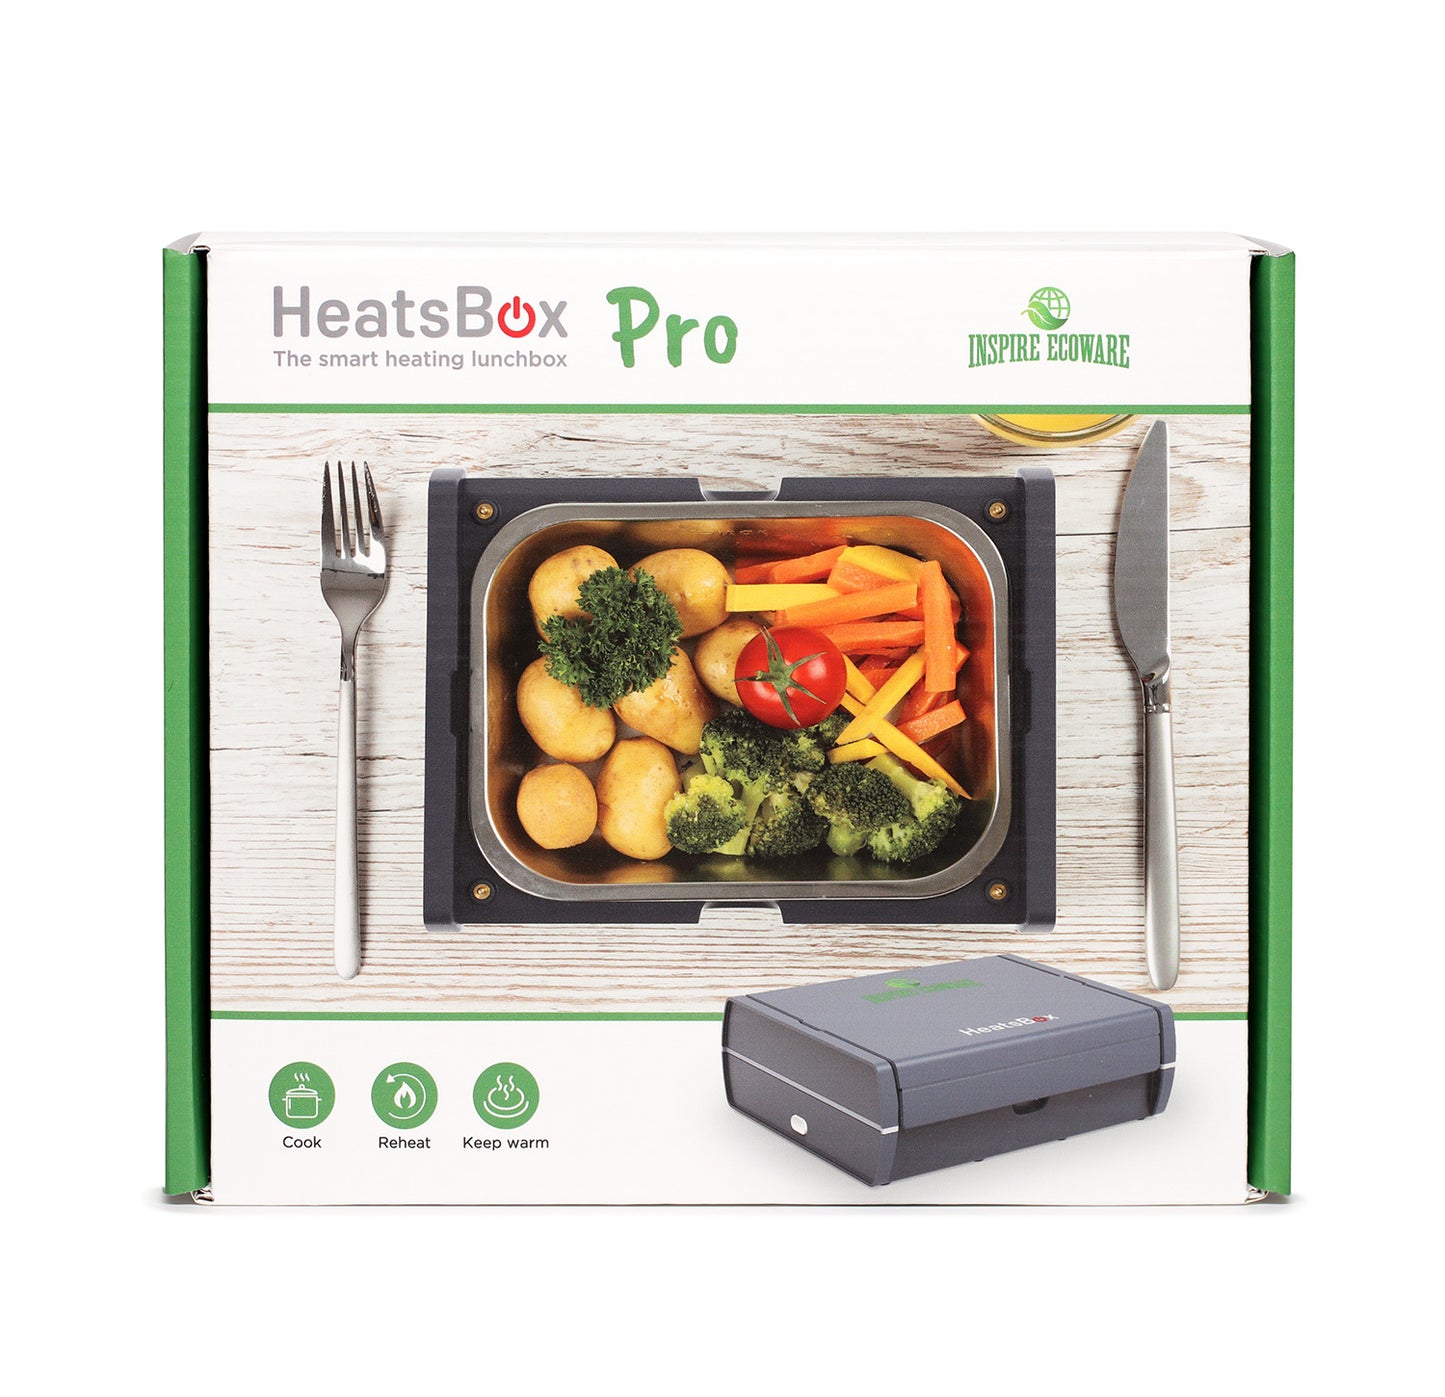 Set of containers HEATSBOX INNER DISH SET for HeatsBox GO/PRO/STYLE/STYLE+  lunch boxes Silver, Graphite WFH10 osta verkkokaupasta